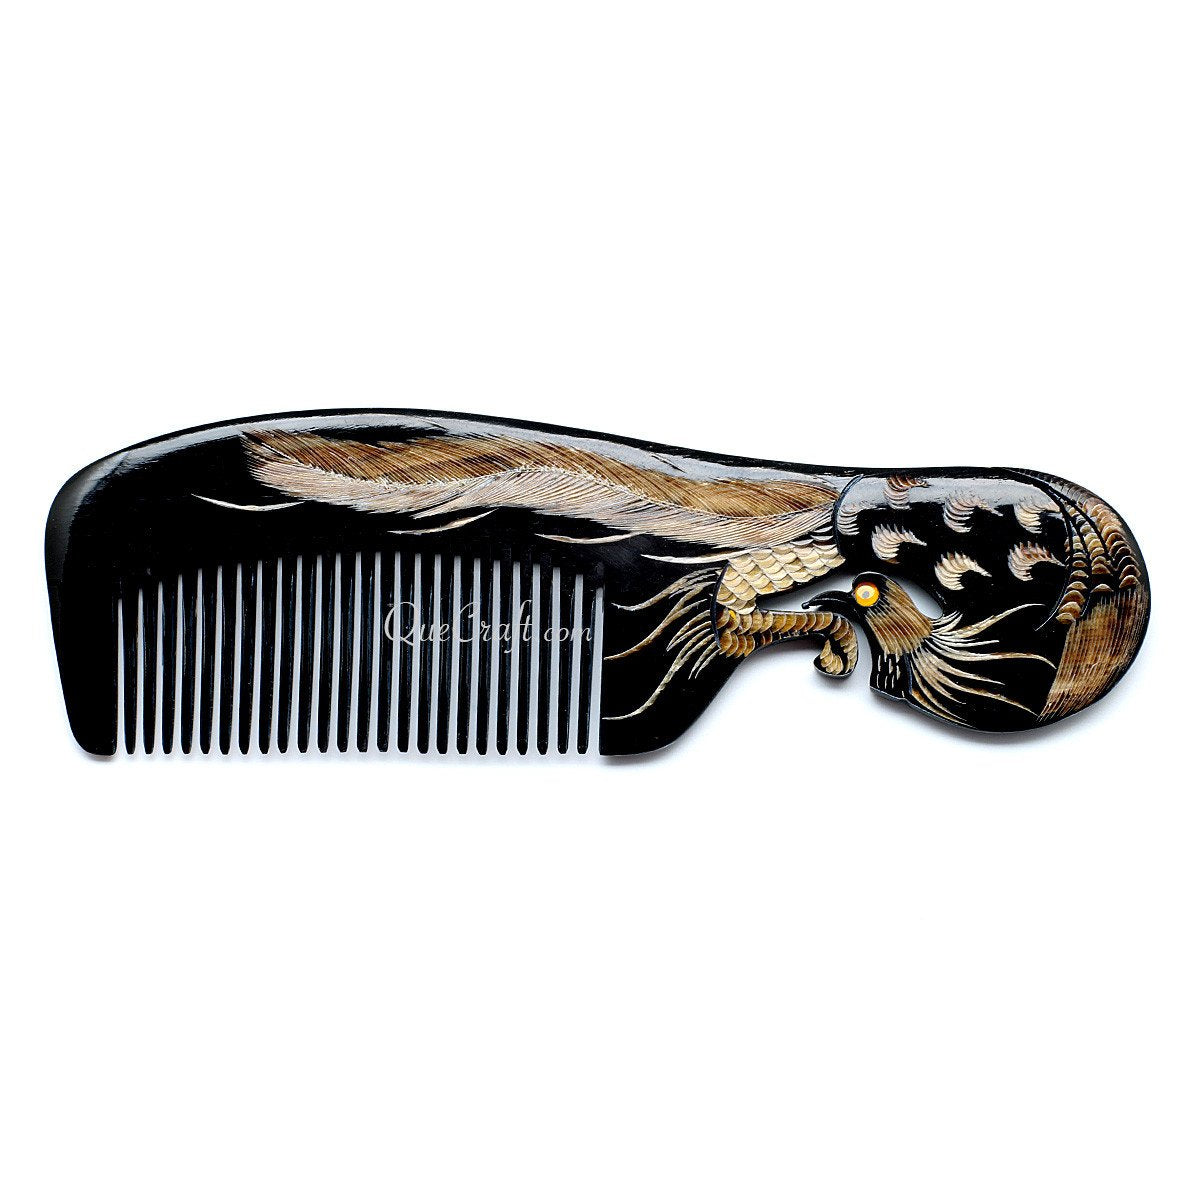 Horn Hair Comb #10674 - HORN JEWELRY